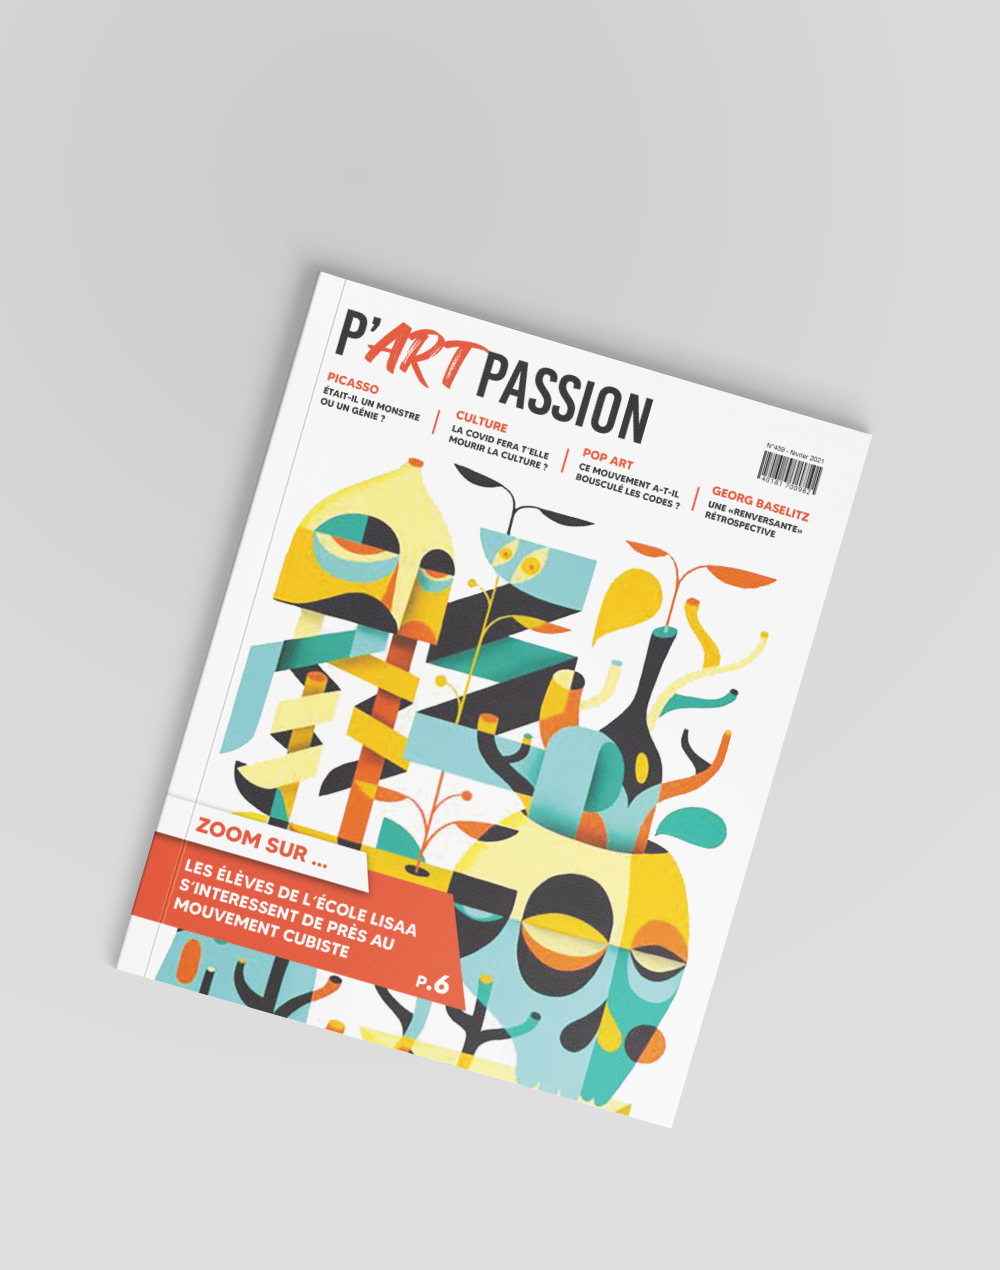 p'art passion magazine